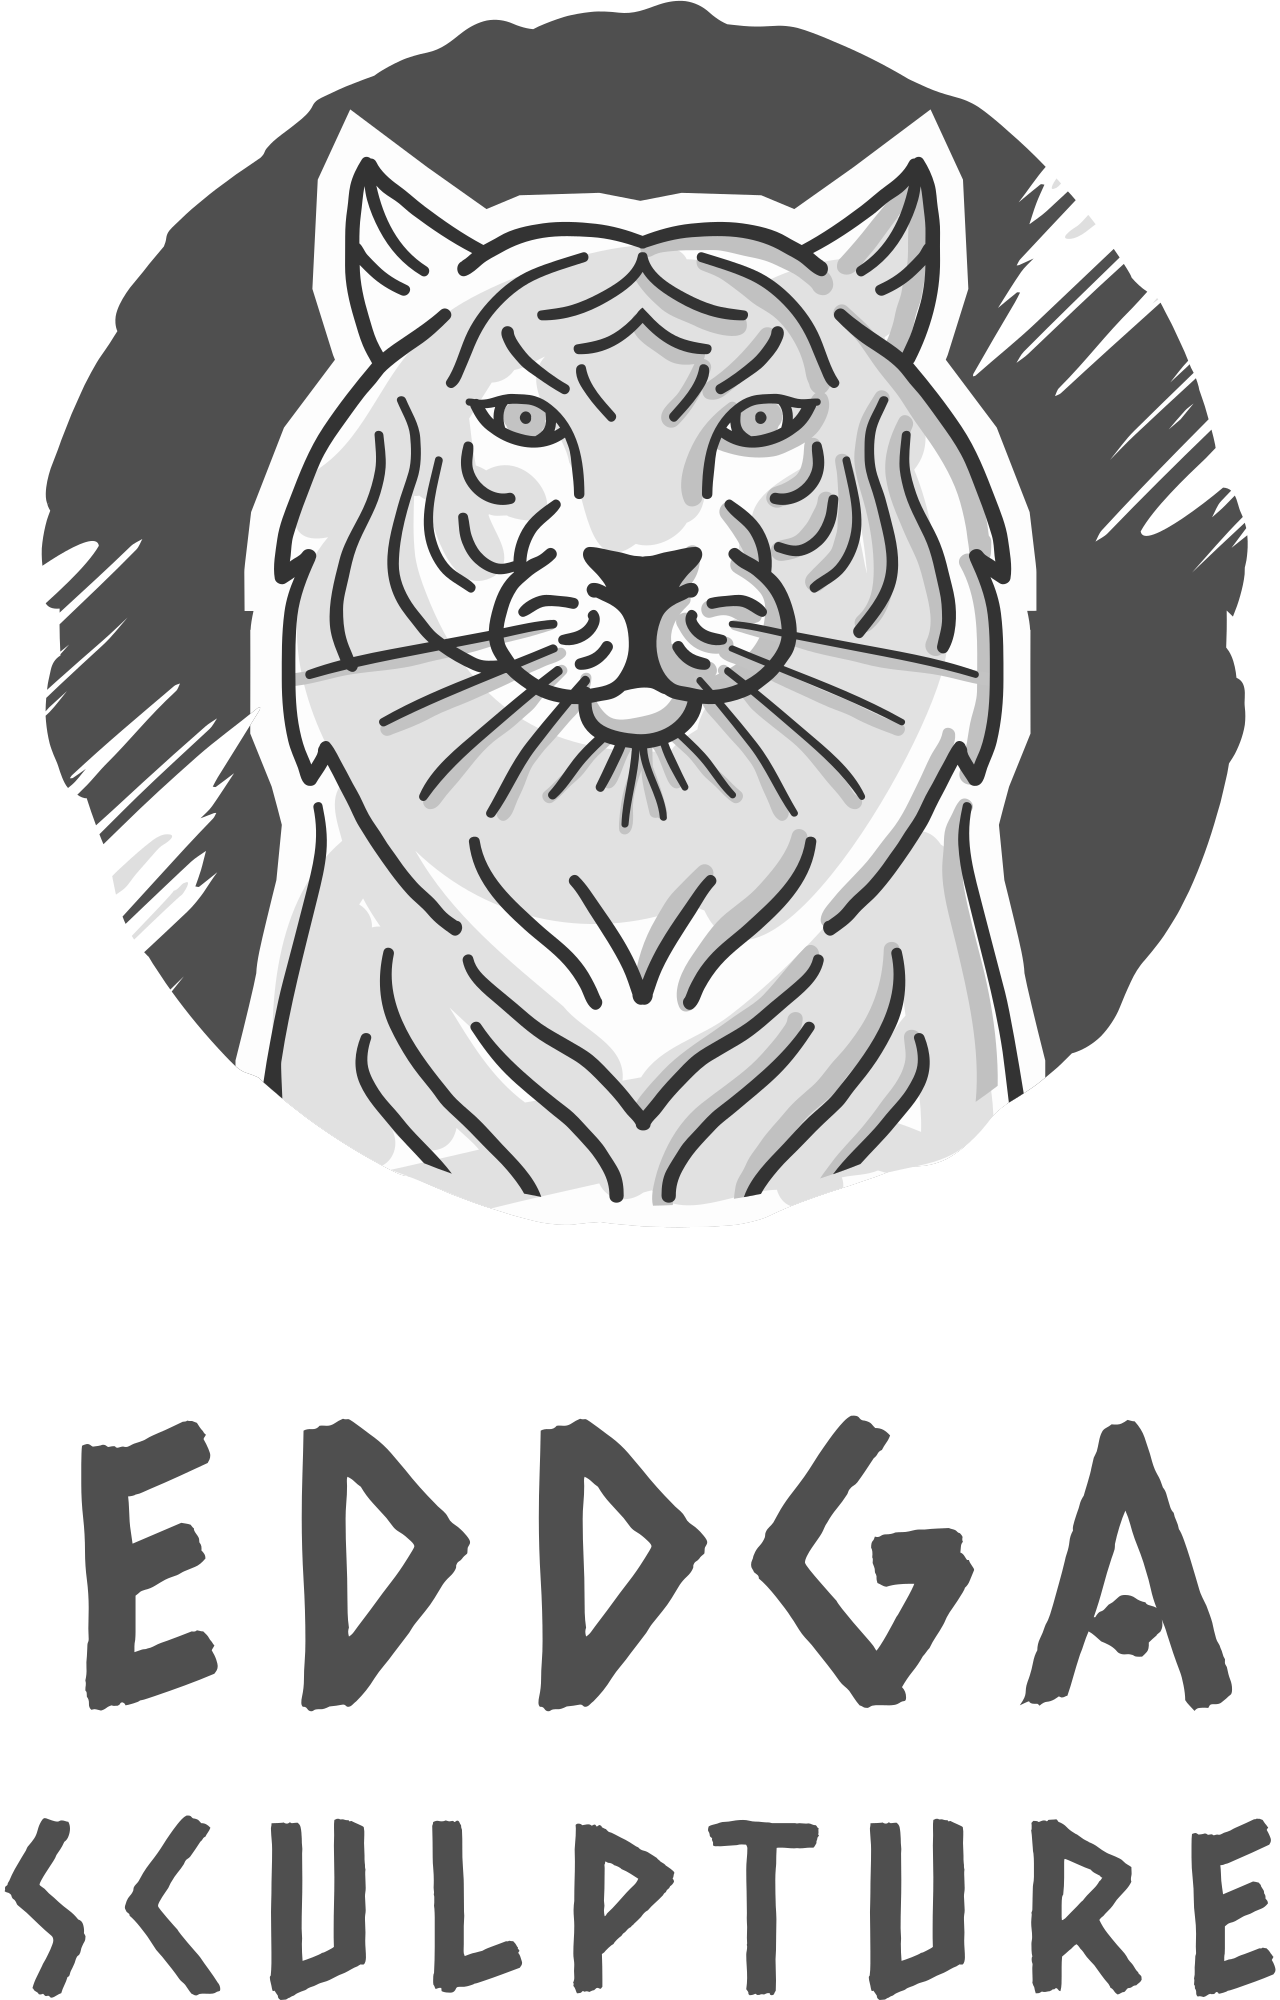 EDDGA's logo